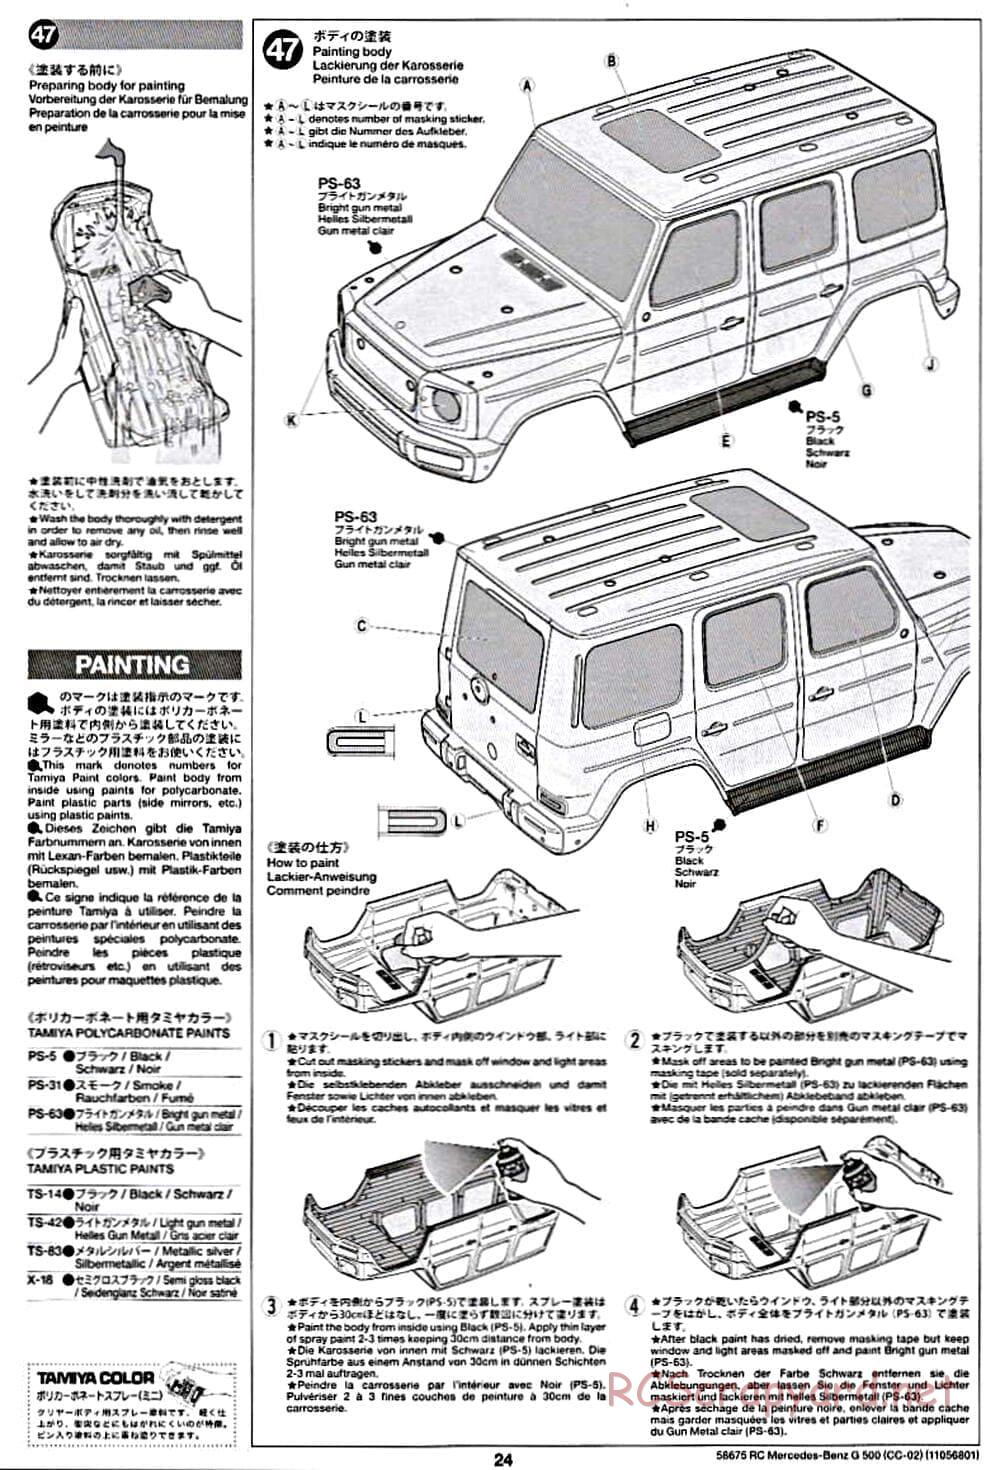 Tamiya - Mercedes-Benz G500 - CC-02 Chassis - Manual - Page 24